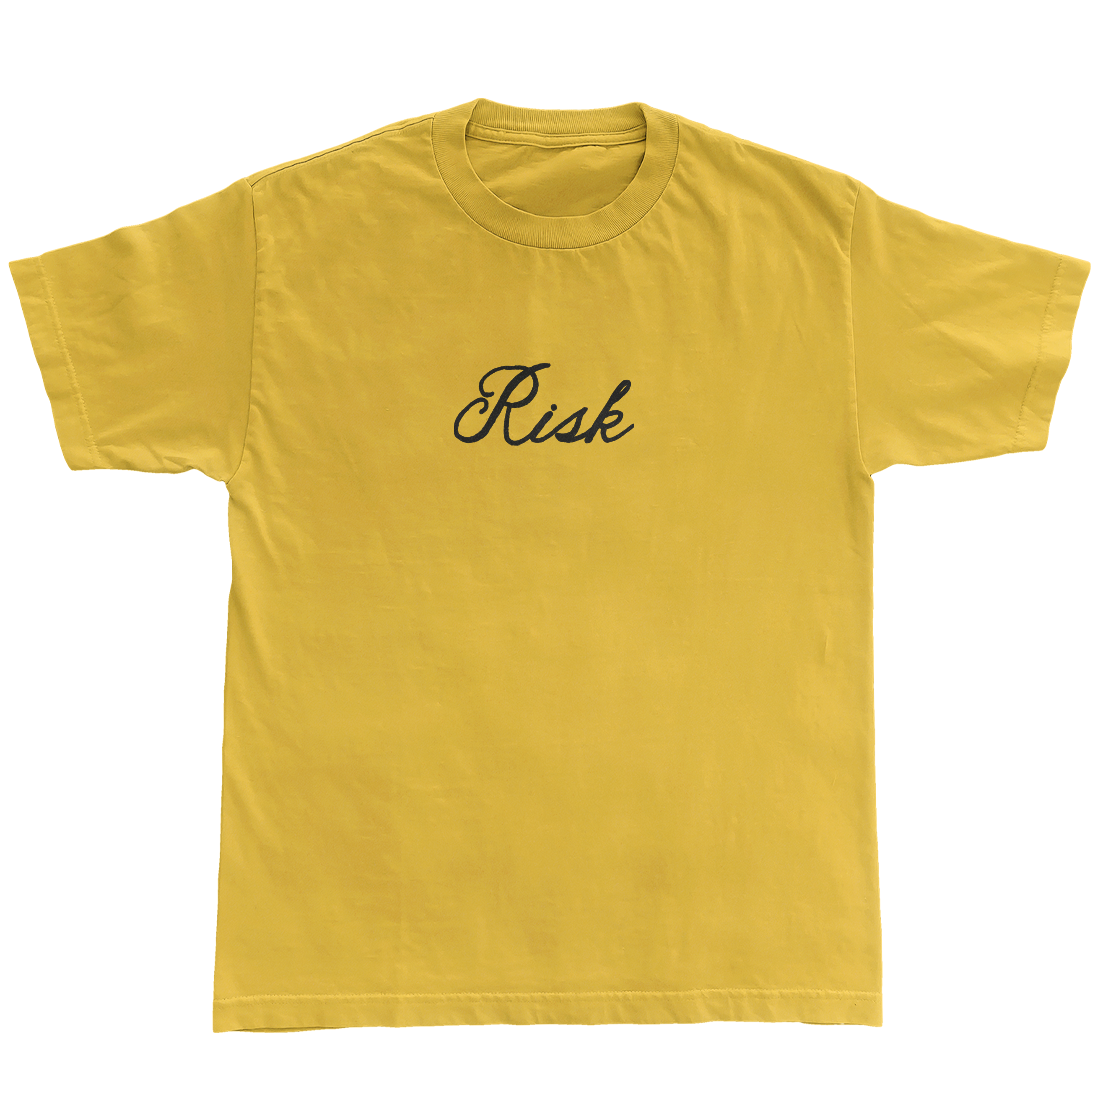 Risk T-shirt Front